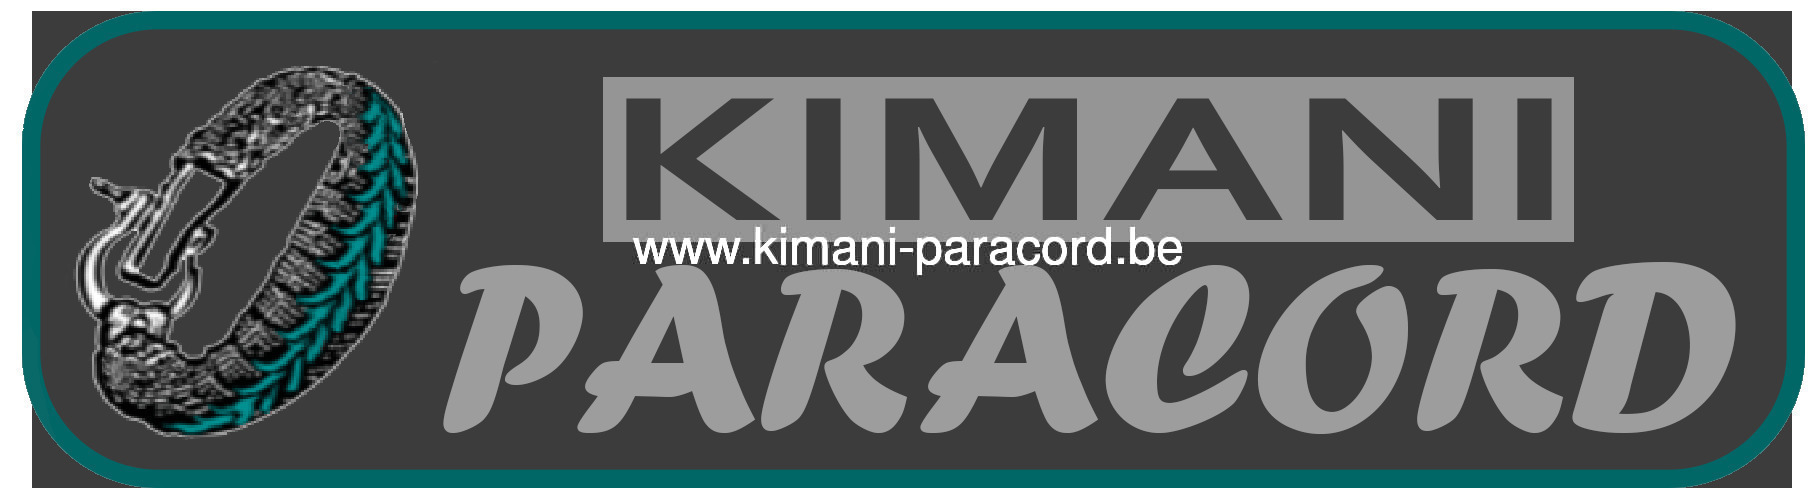 Kimani Paracord